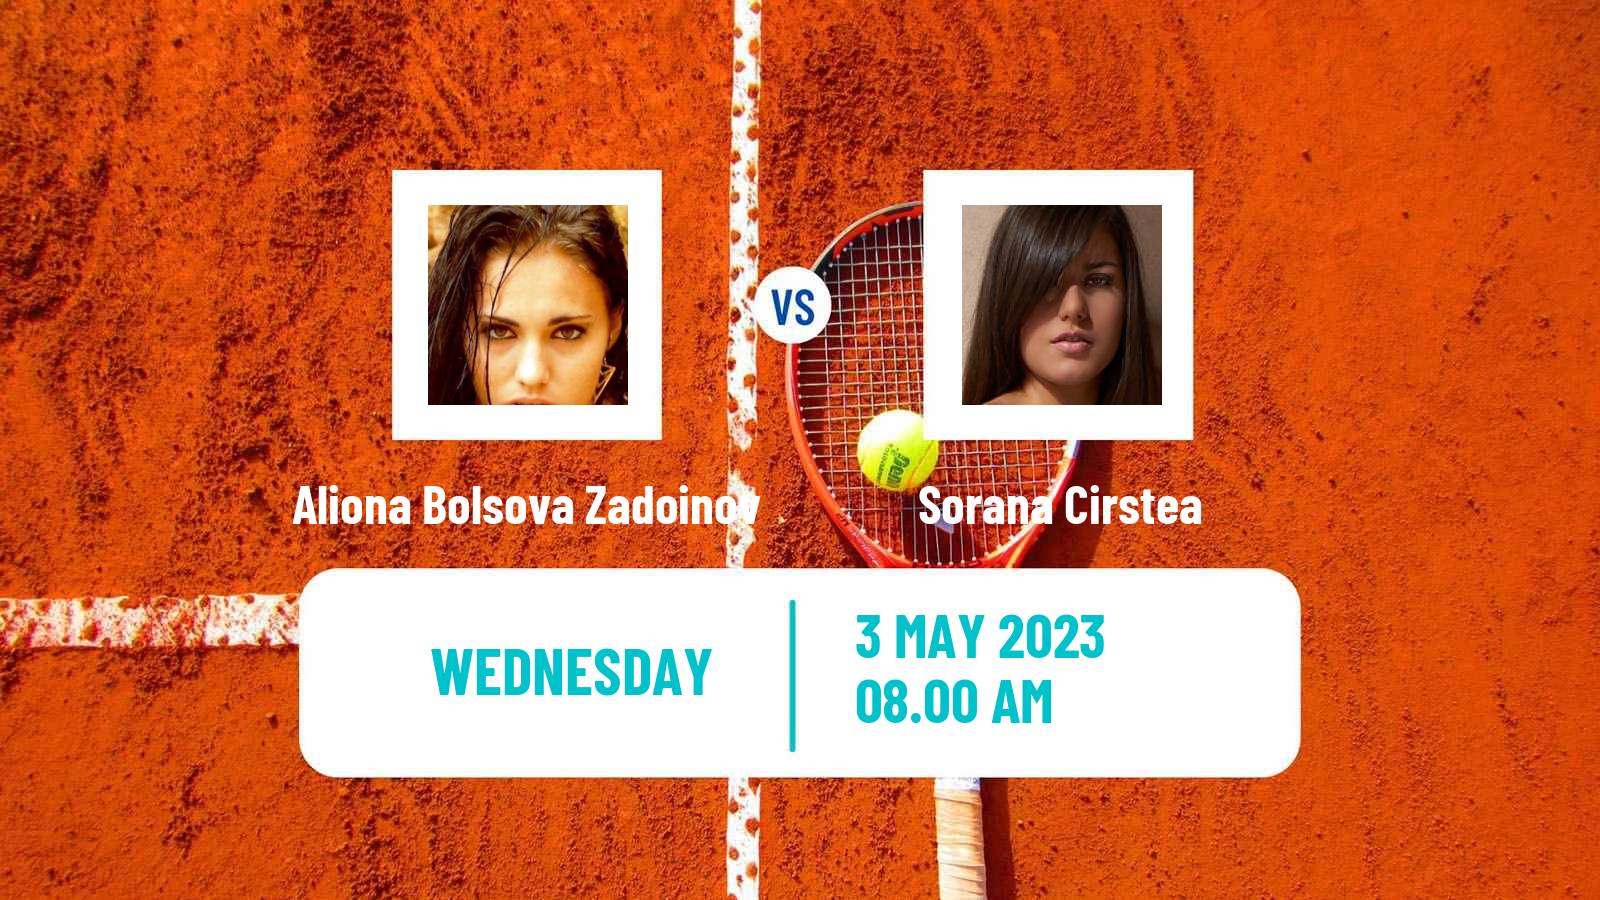 Tennis ATP Challenger Aliona Bolsova Zadoinov - Sorana Cirstea